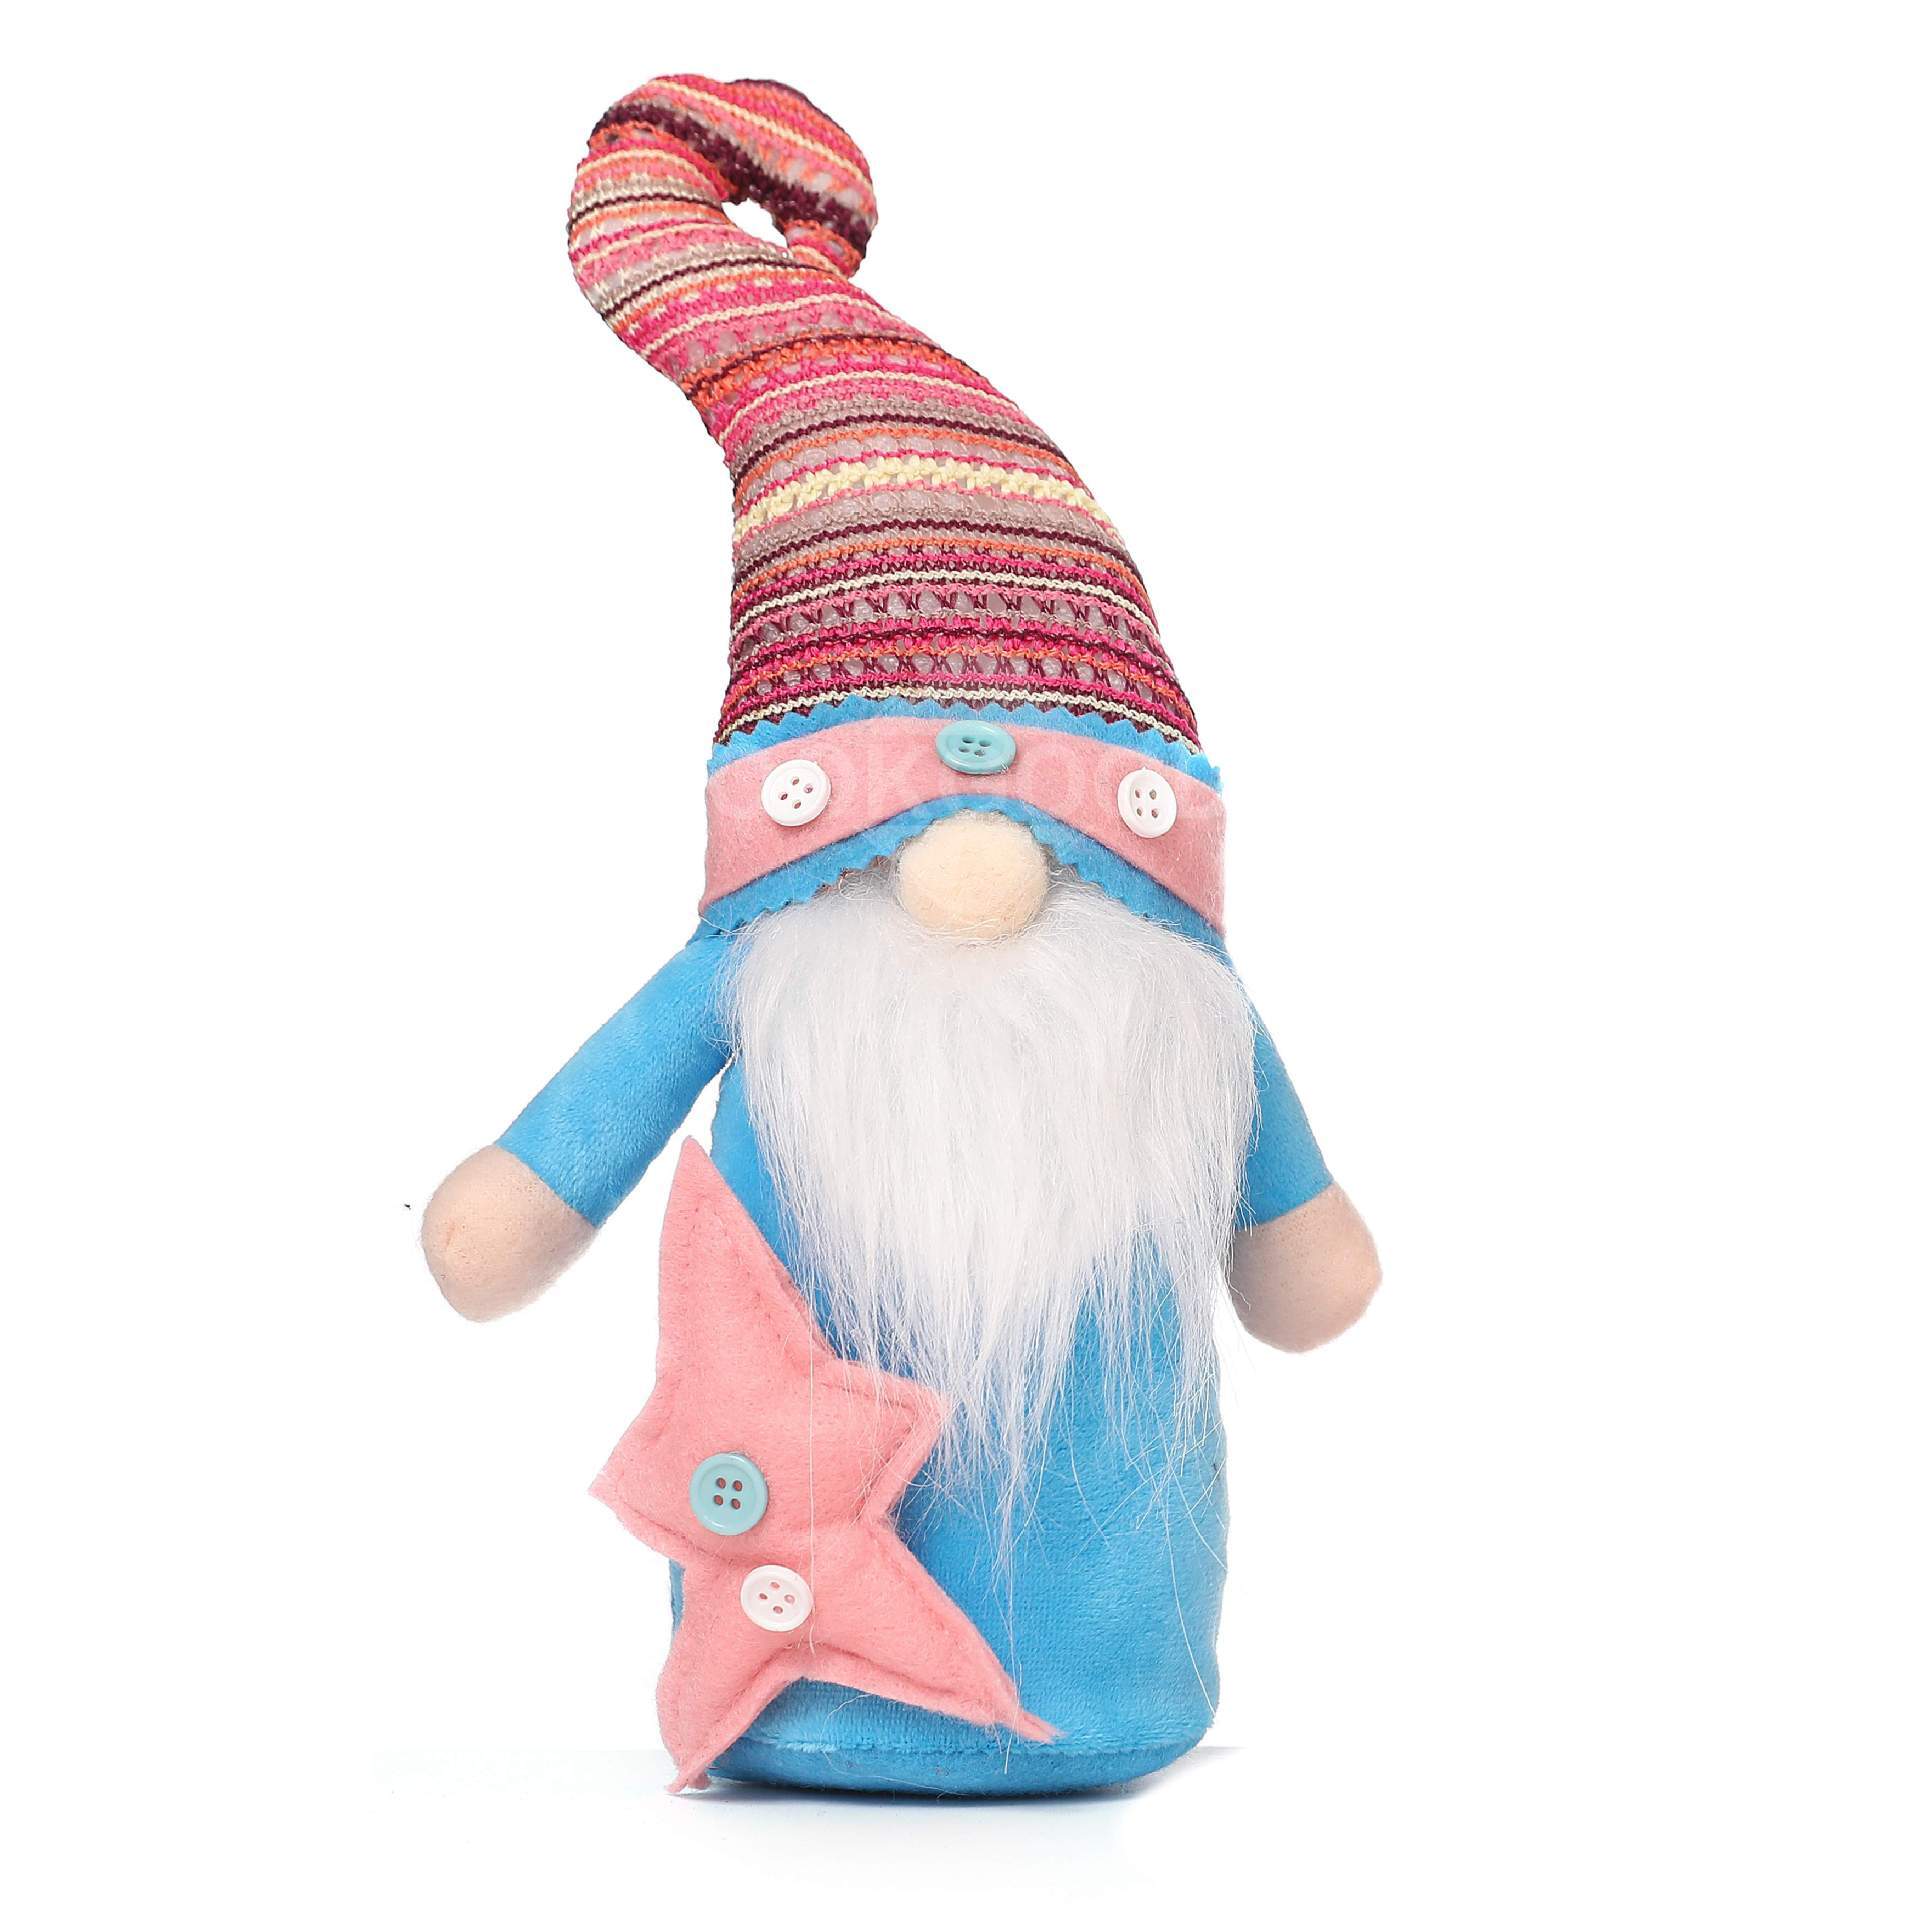 Plush Gnome Wearing Bohemian Style Hat